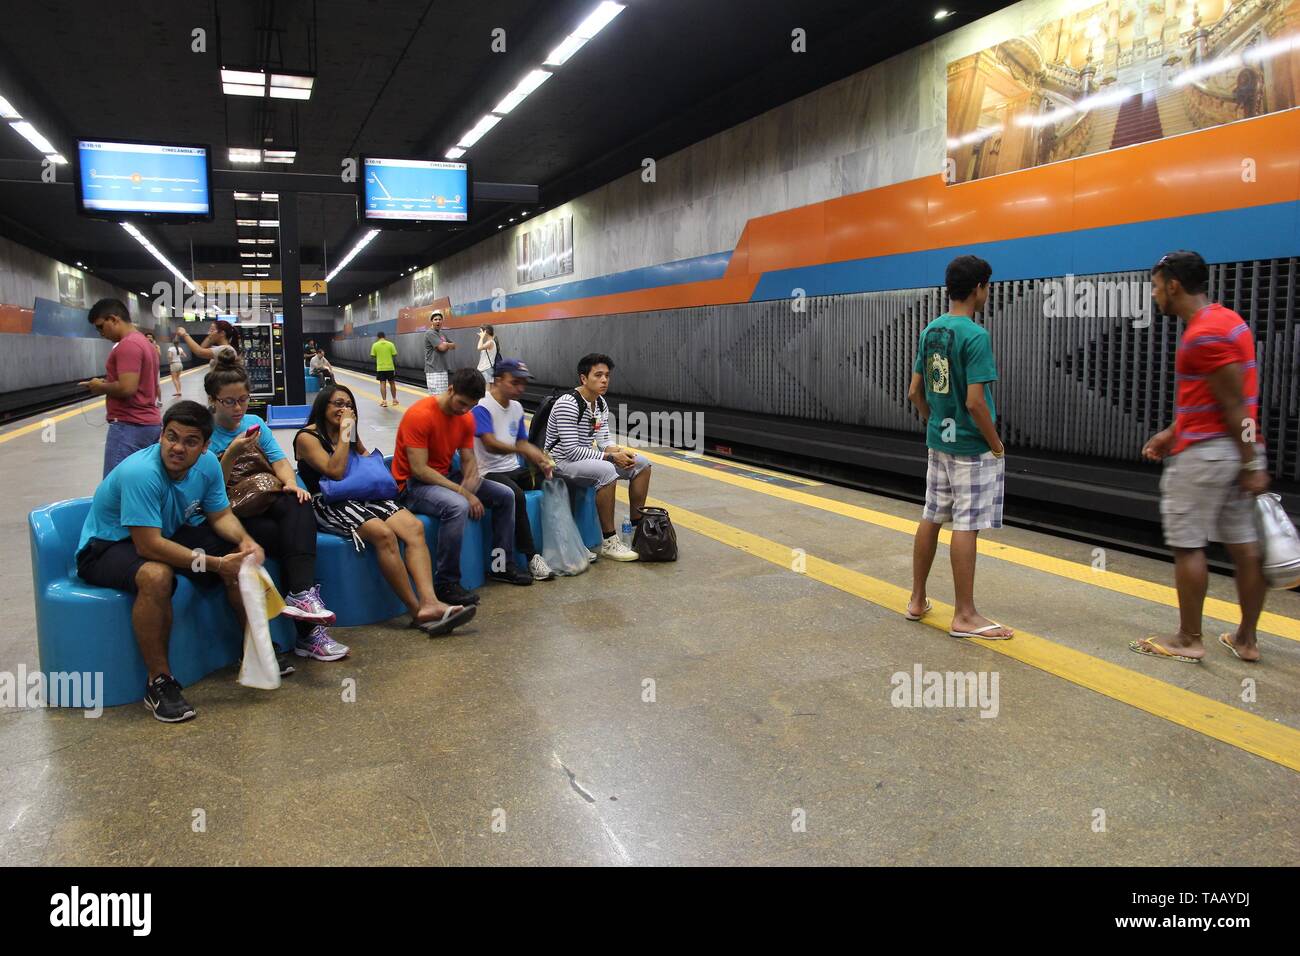 RIO DE JANEIRO, BRAZIL - OCTOBER 19, 2014: Travelers wait for metro in Rio de Janeiro. Rio Metro had 401.5 million annual rides in 2012. Stock Photo